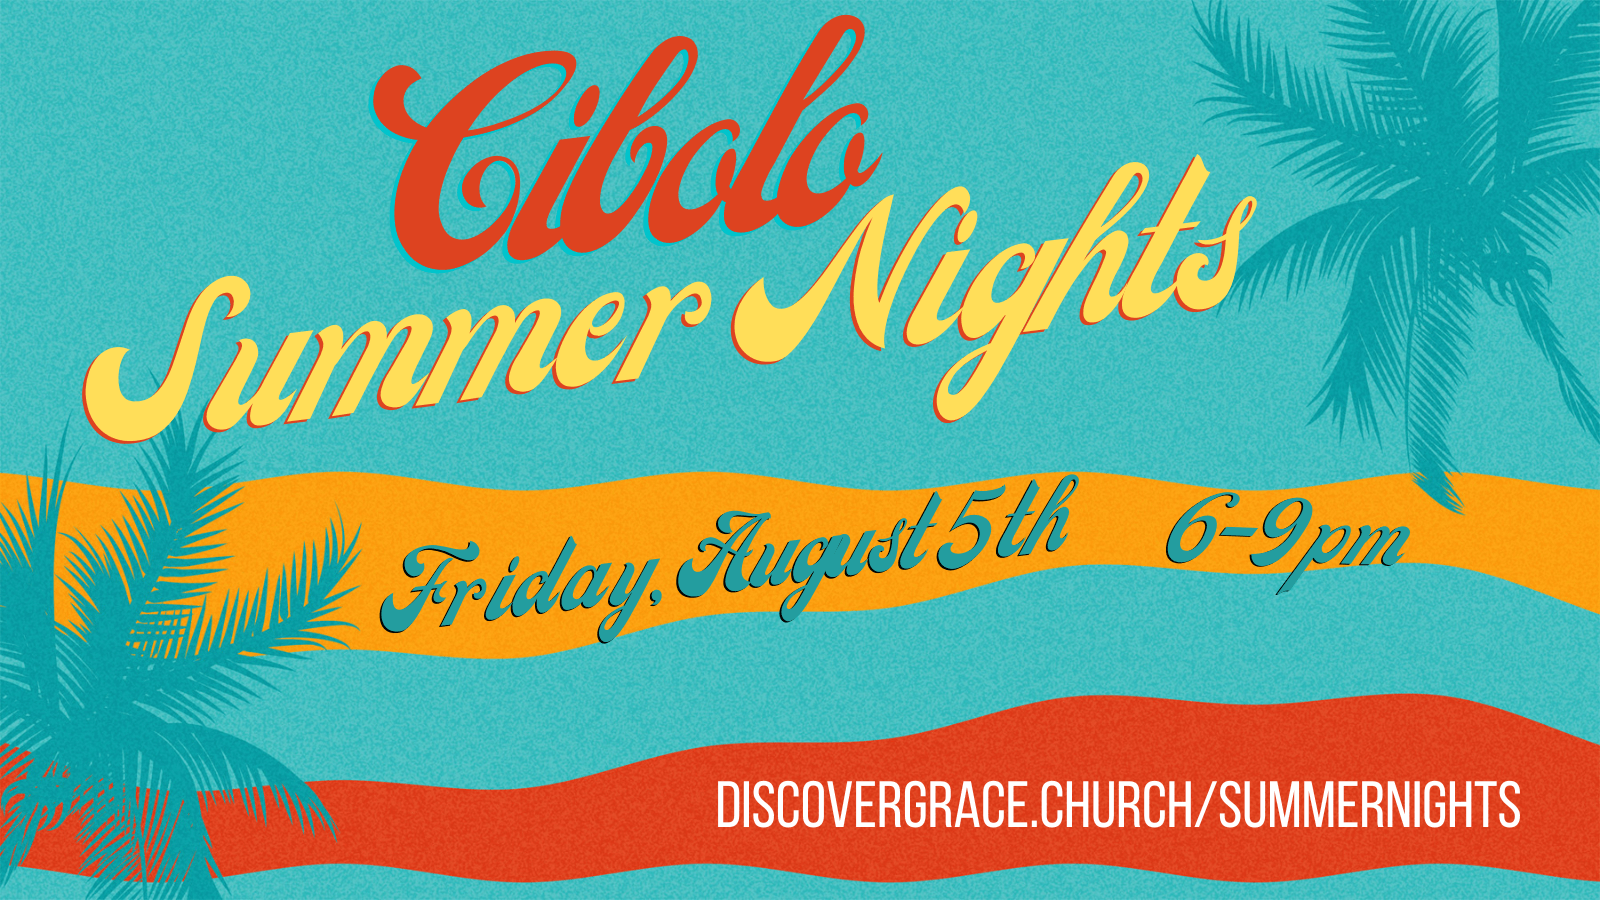 Community Outreach Event "Cibolo Summer Nights" Grace Community